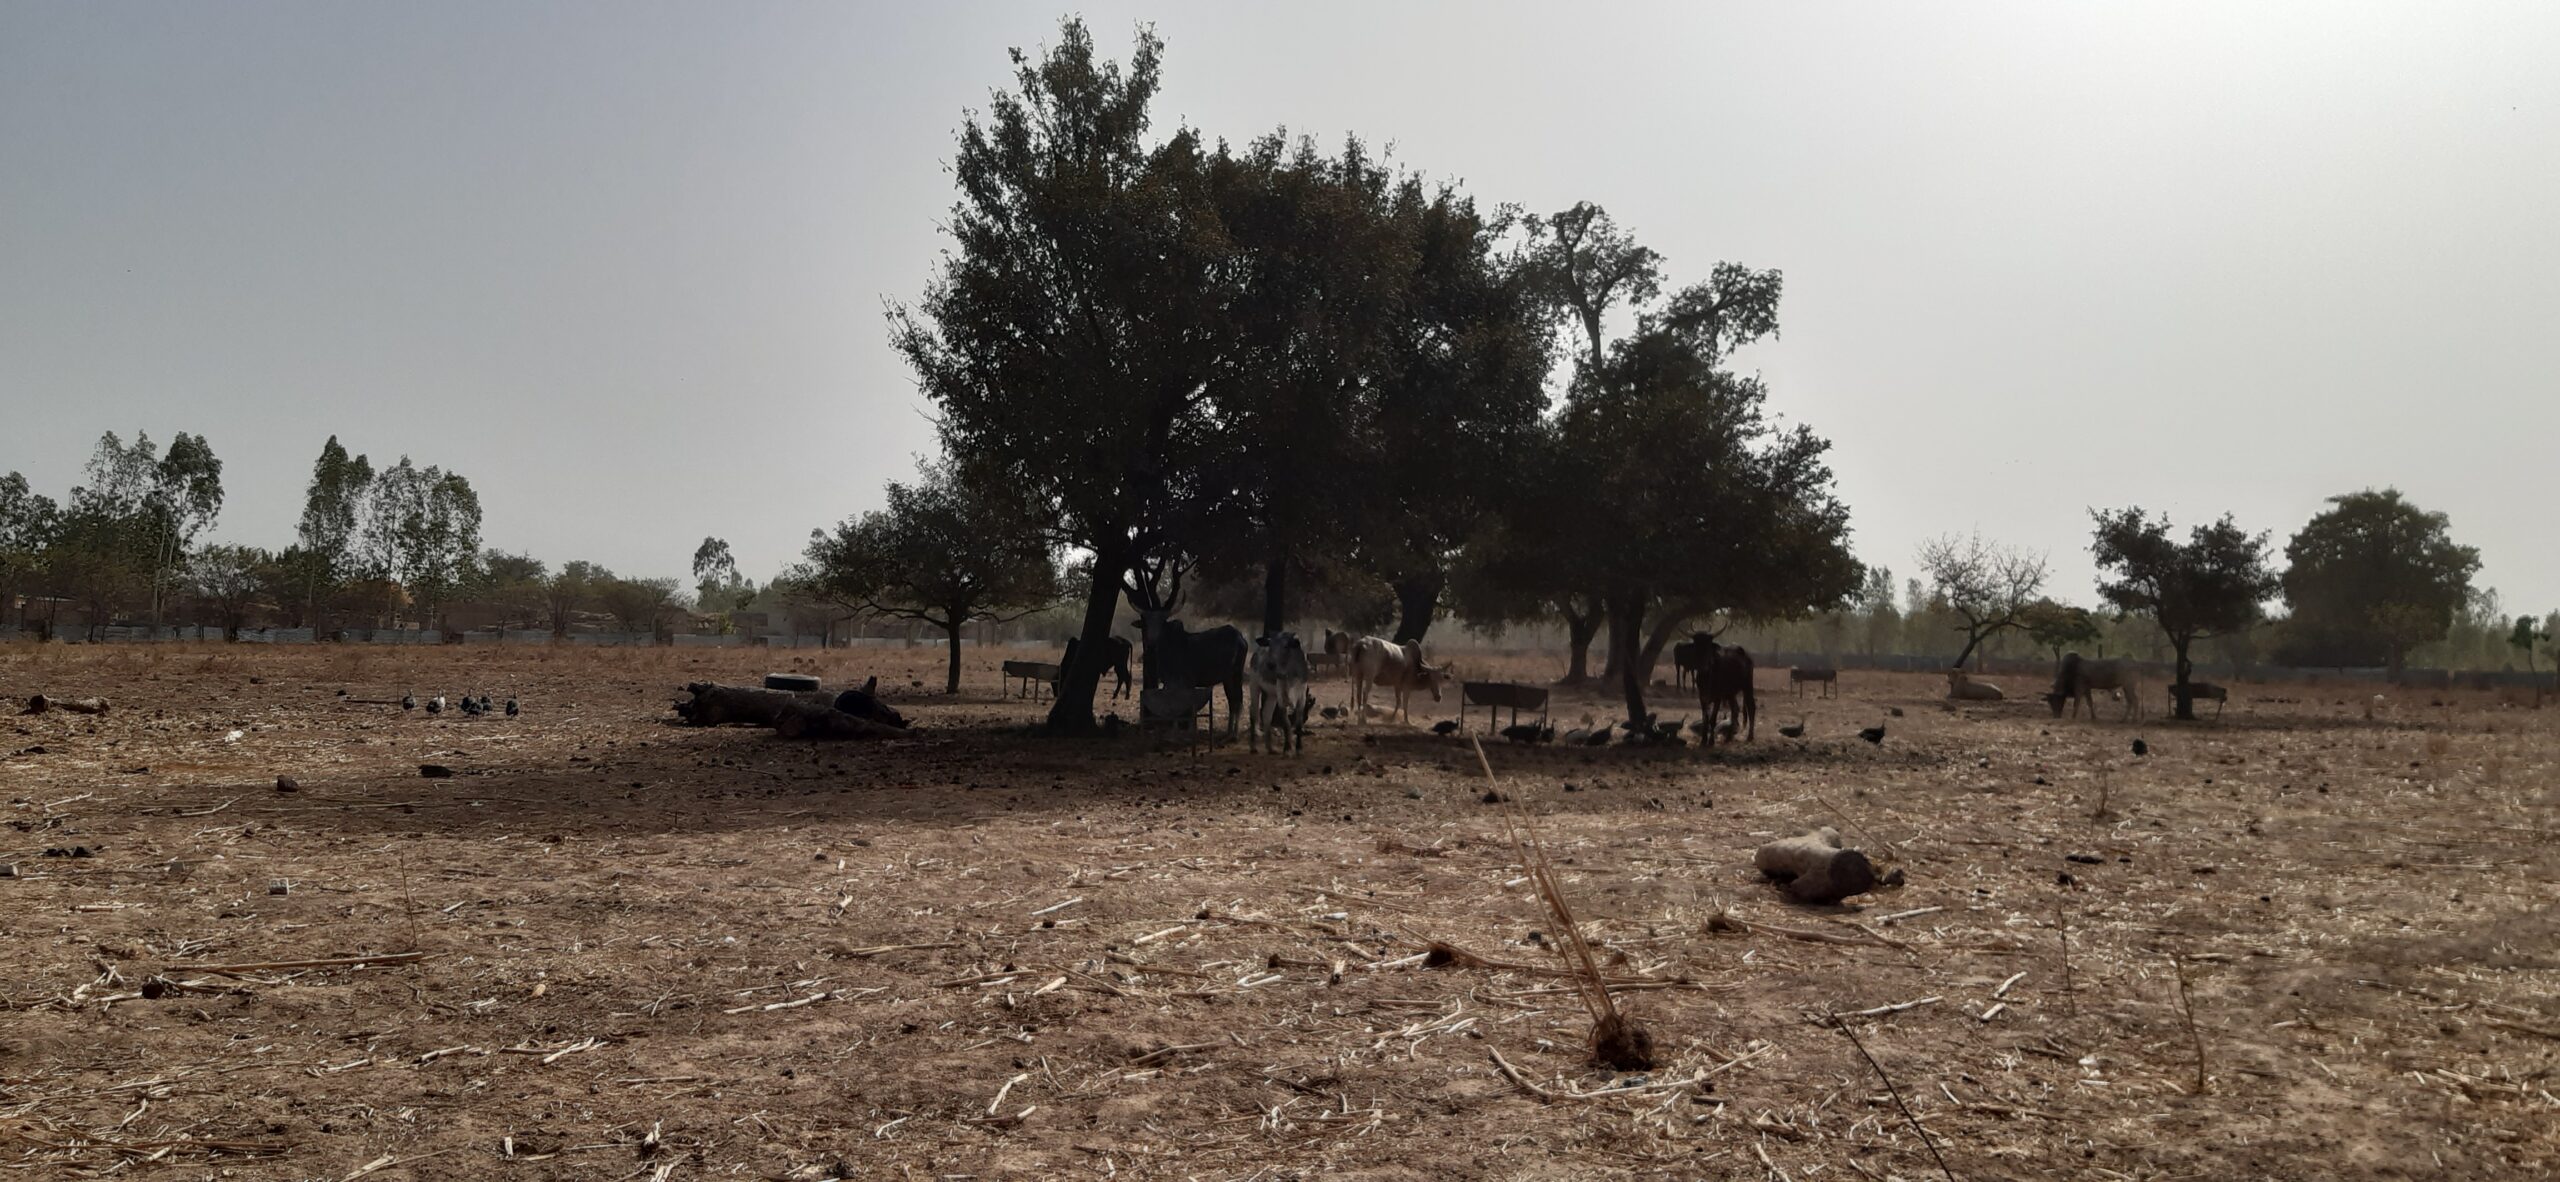 Cattle farm in the outskirts of Ouagadougou, Burkina Faso.